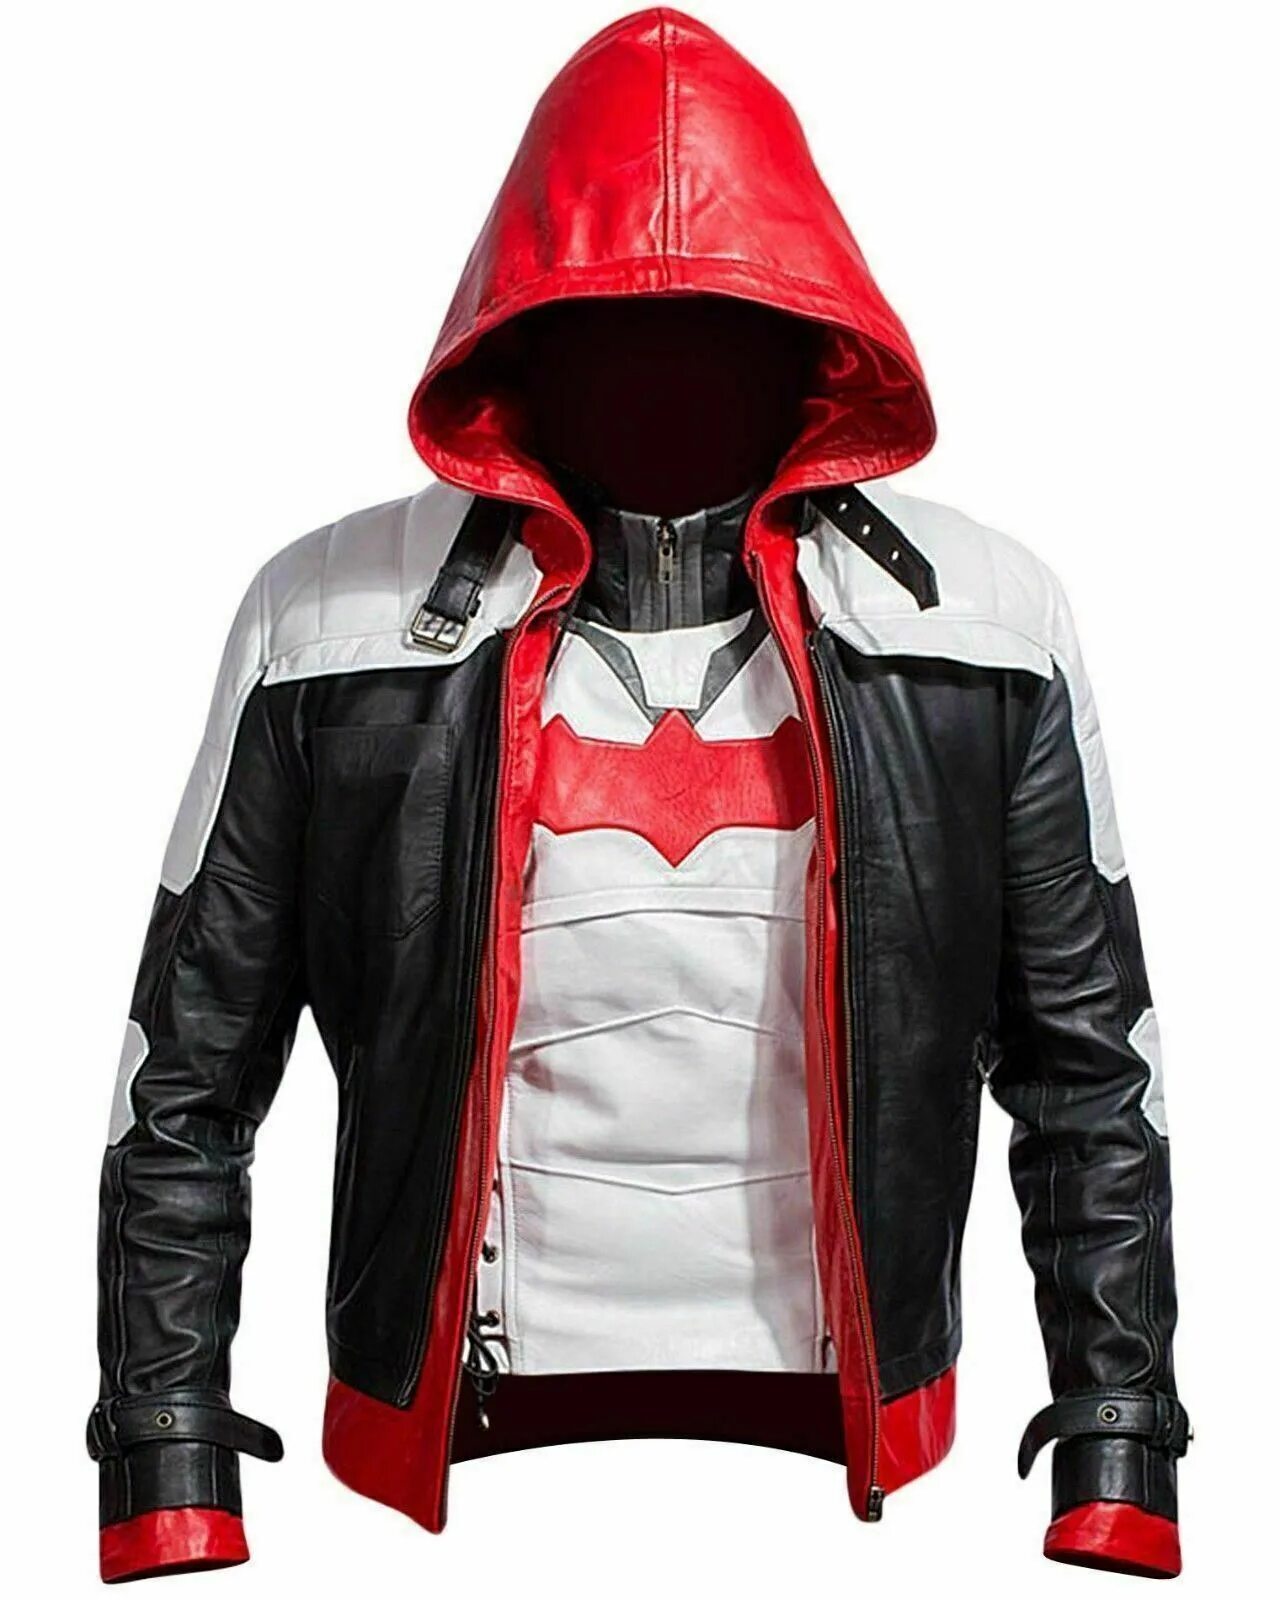 Красный капюшон купить. Куртка Бэтмен Аркхем. Куртка Бэтмен рыцарь Аркхема. Красный капюшон Batman Arkham Knight. Red Hood куртка.